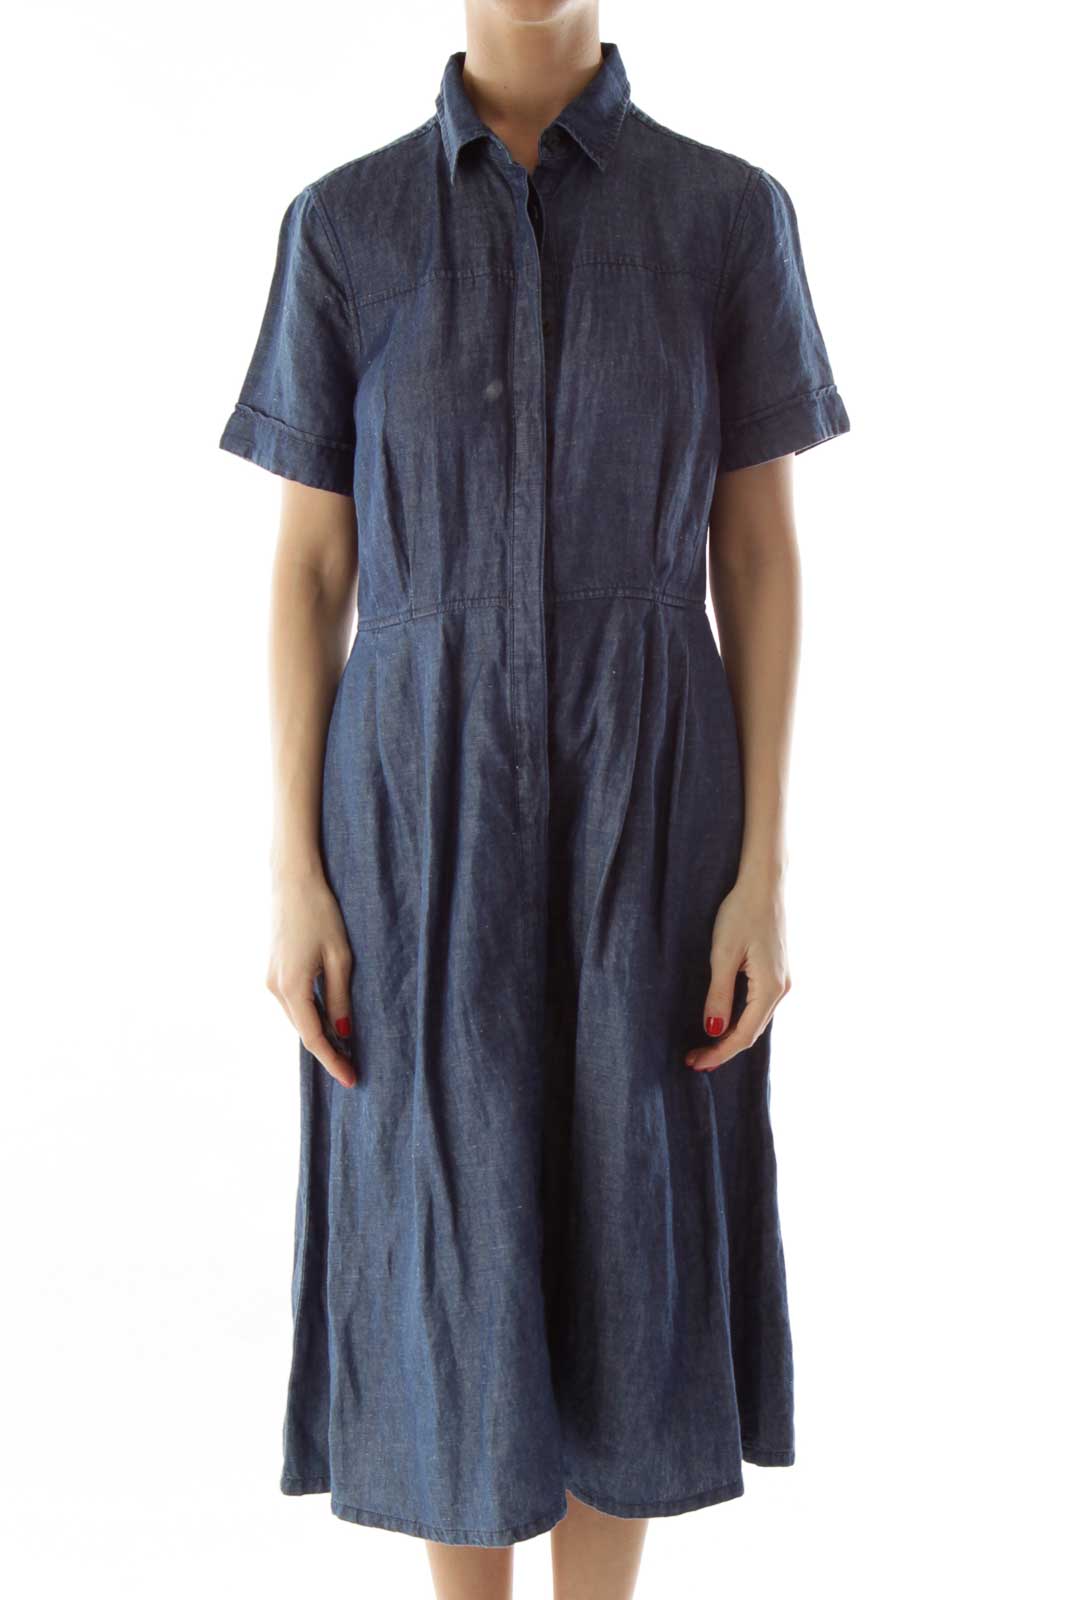 Blue Denim Buttoned Pocketed Dress Front